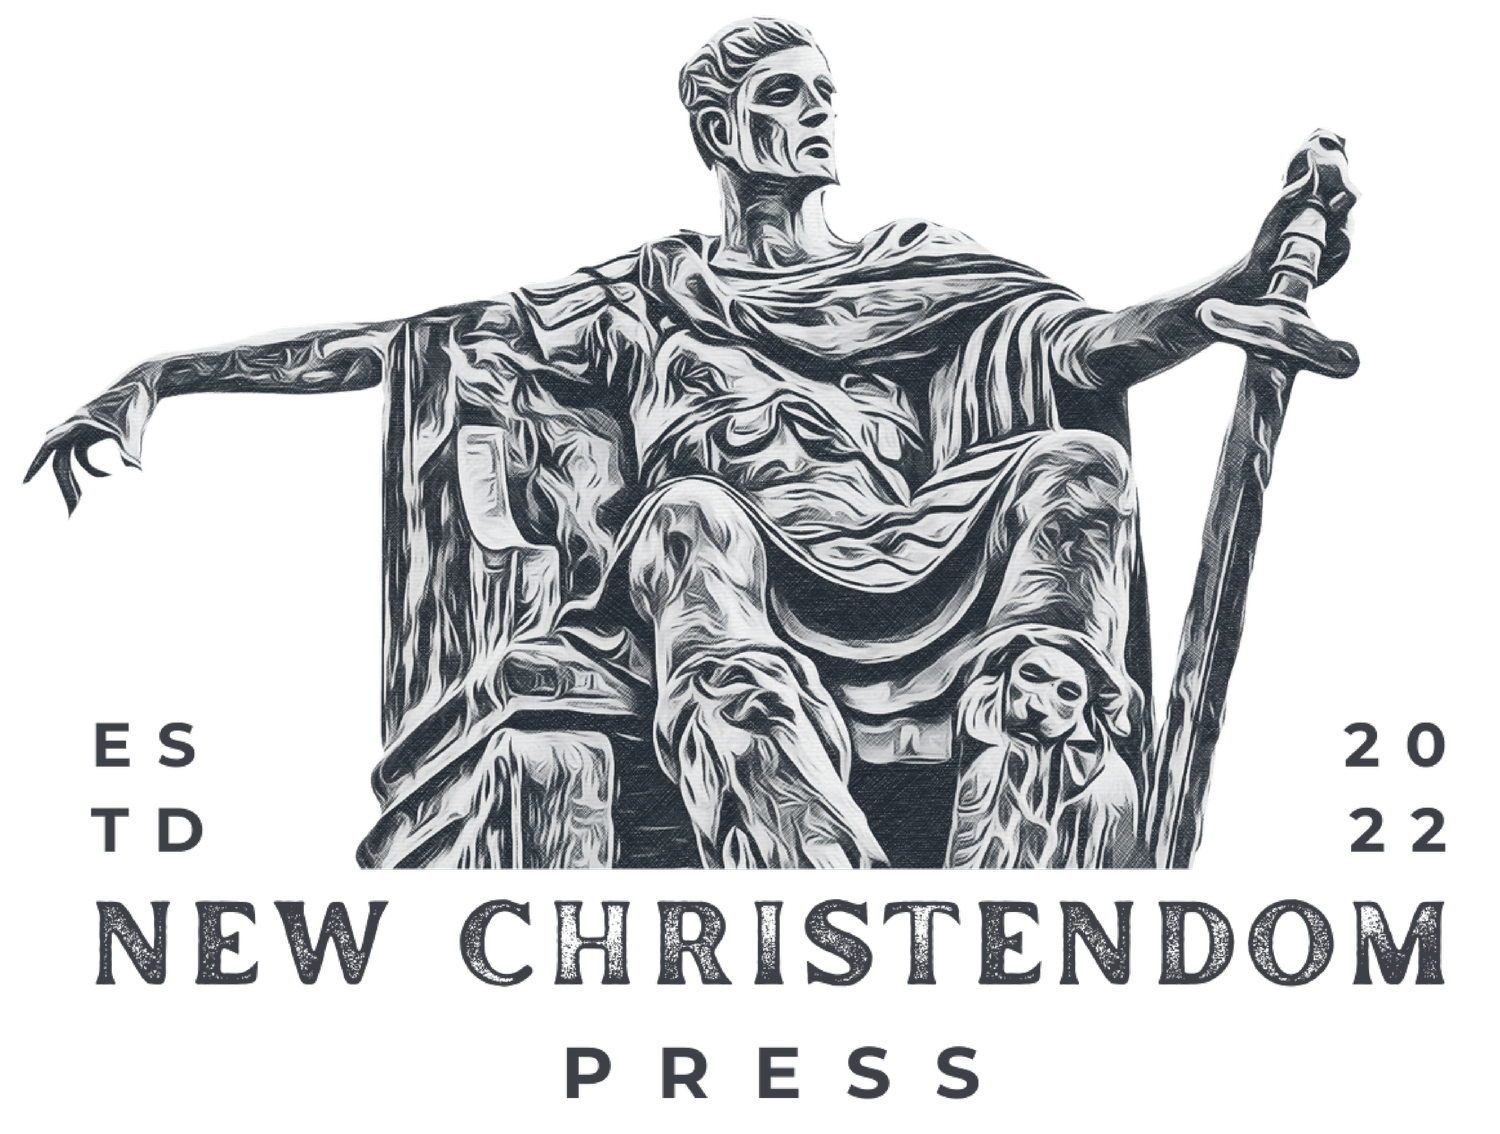 New Christendom Press